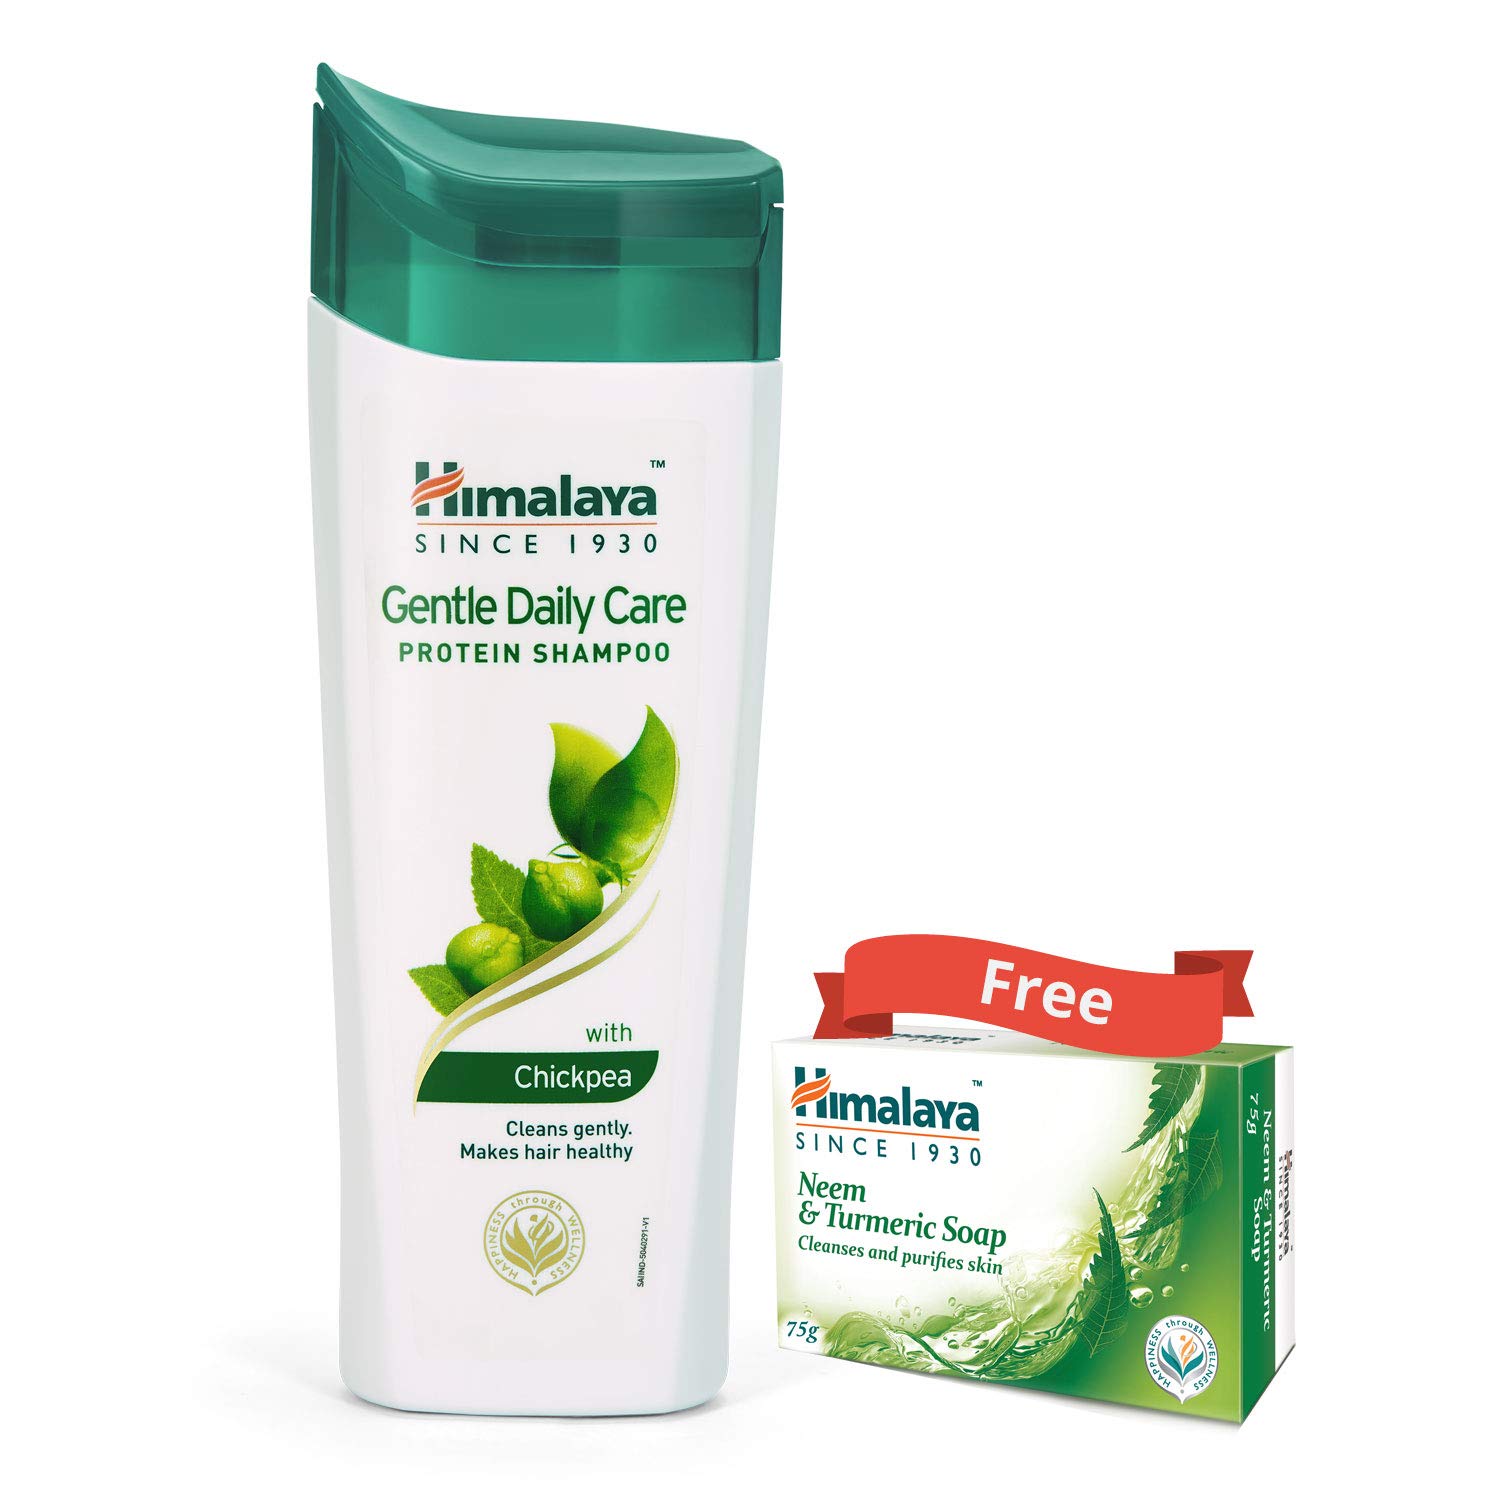 Himalaya Gentle Daily Care Protein Shampoo 200ml + Free 1 Himalaya 75gm Soap